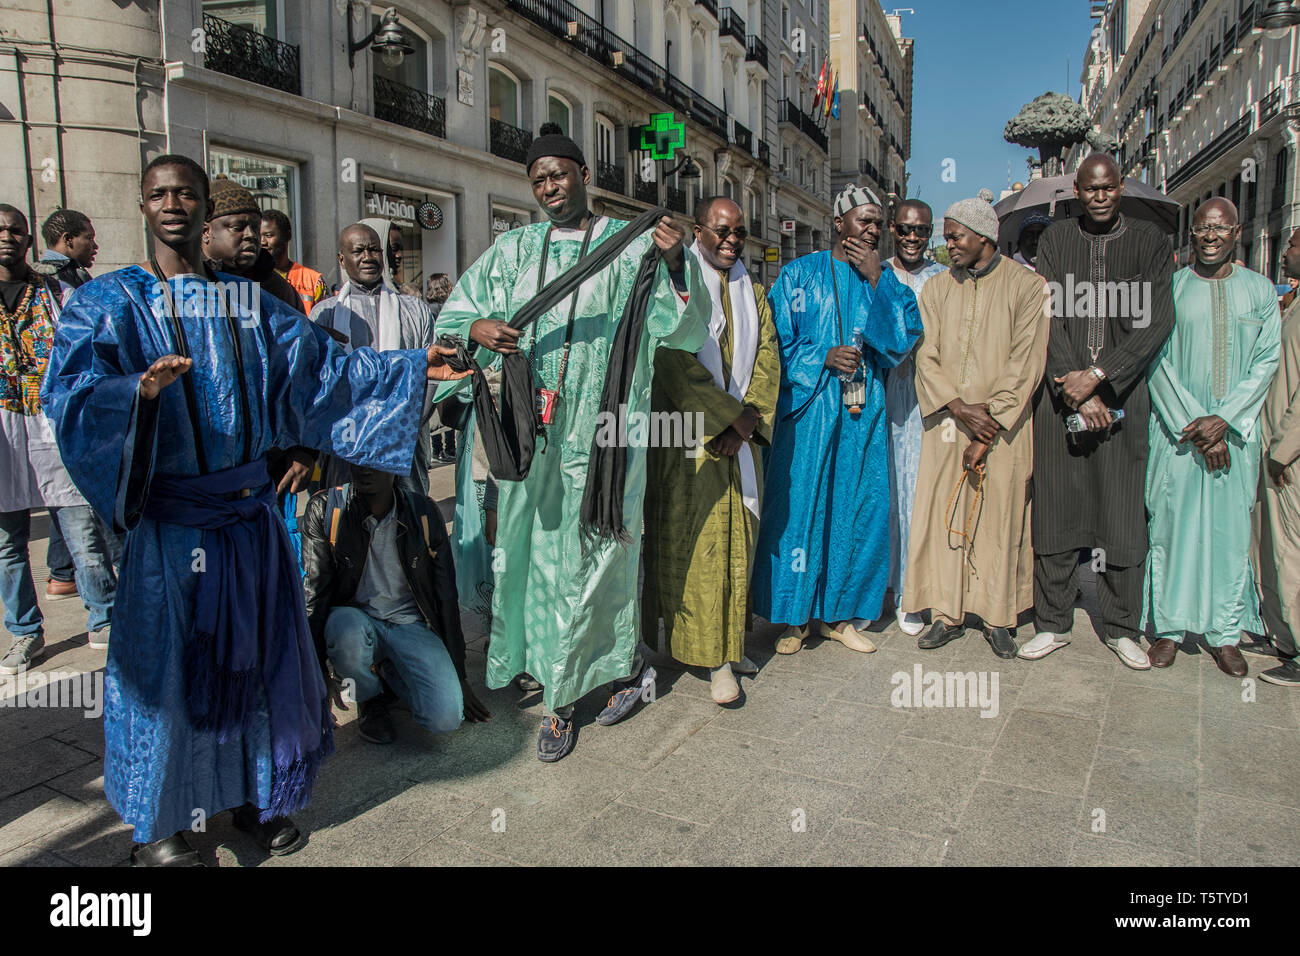 Les gens du Sénégal vu célébrer Khassida journée dans la puerta del Sol Madrid. Banque D'Images